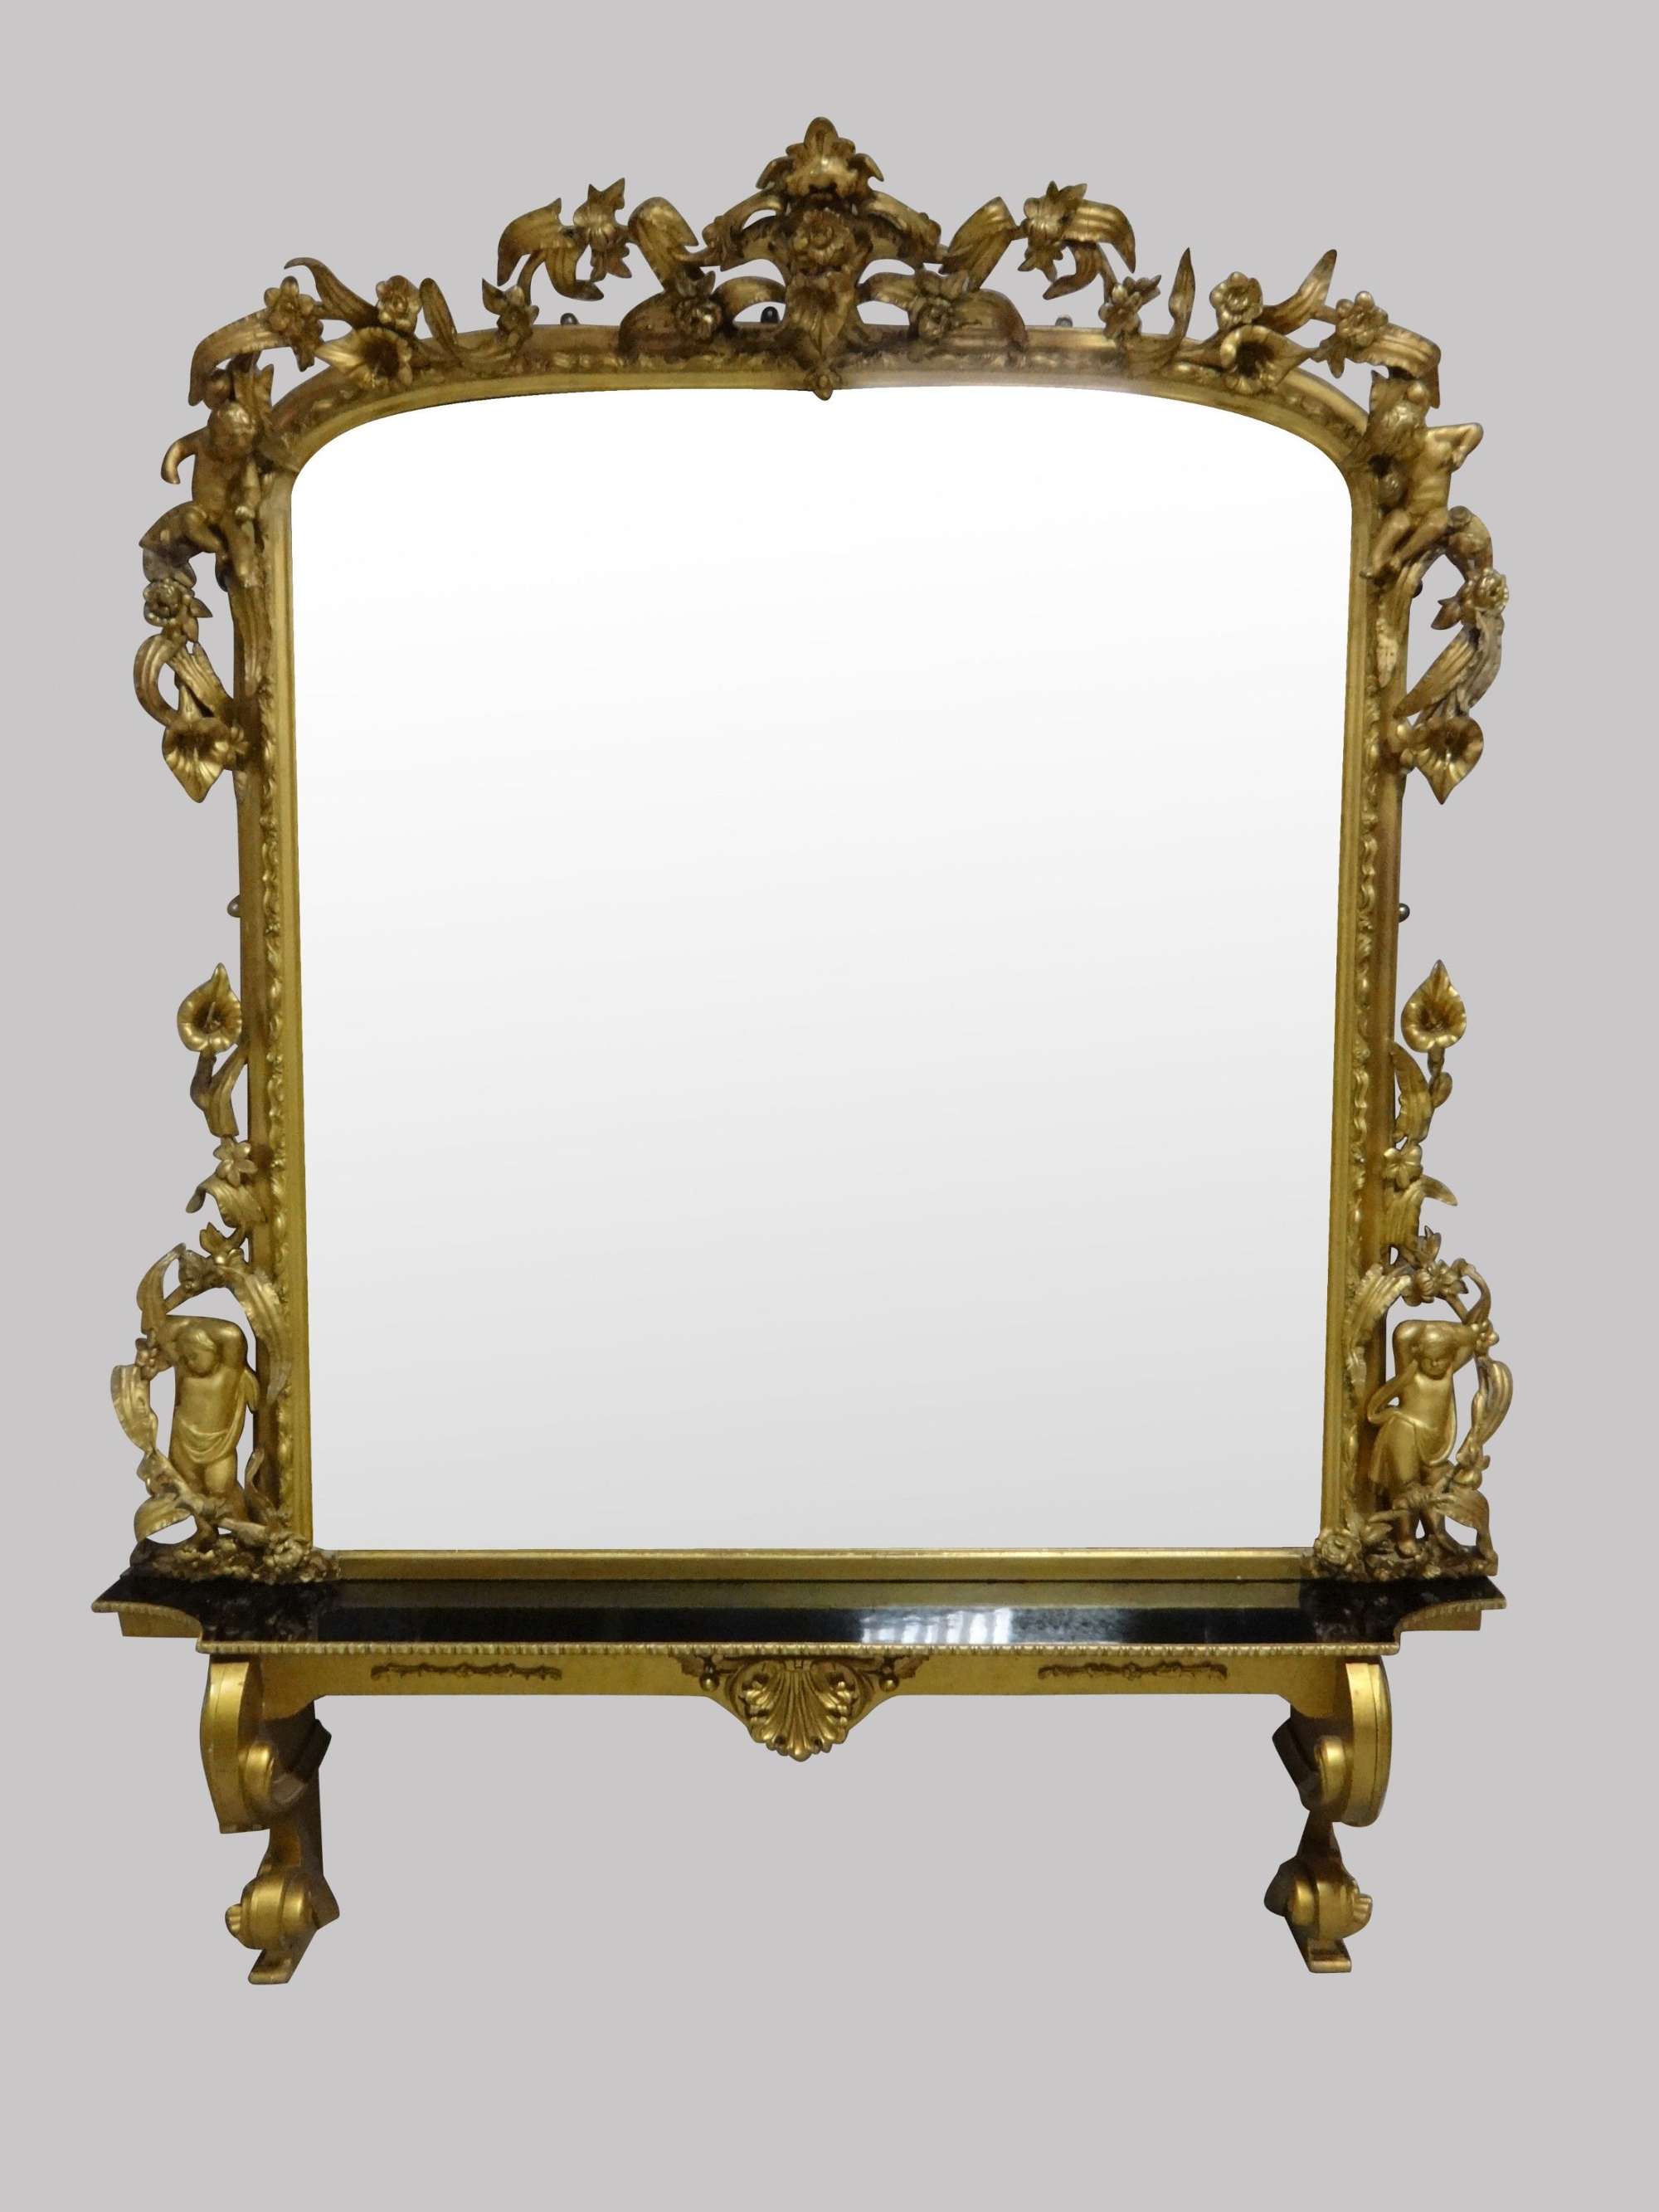 Very Rare & Impressive Victorian English Gilt Antique Overmantle Mirror